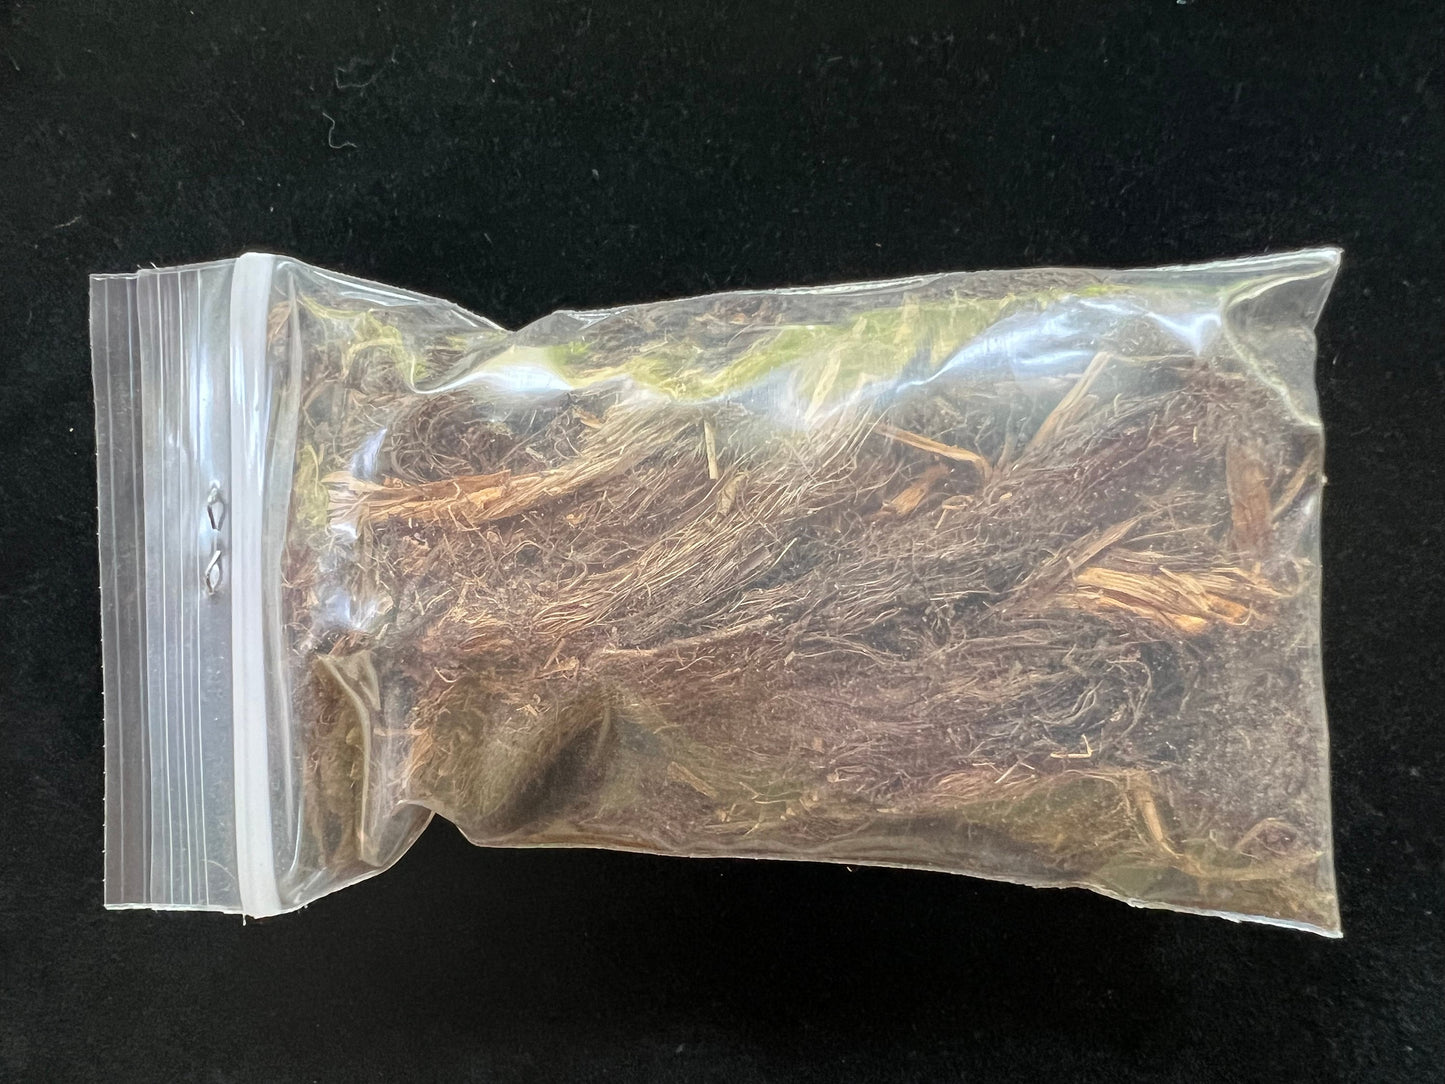 Pang Poe Root Incense | Himalayan Incense | 25 grams | Jatamansi (Nard) | Bhutan | Layap Sang